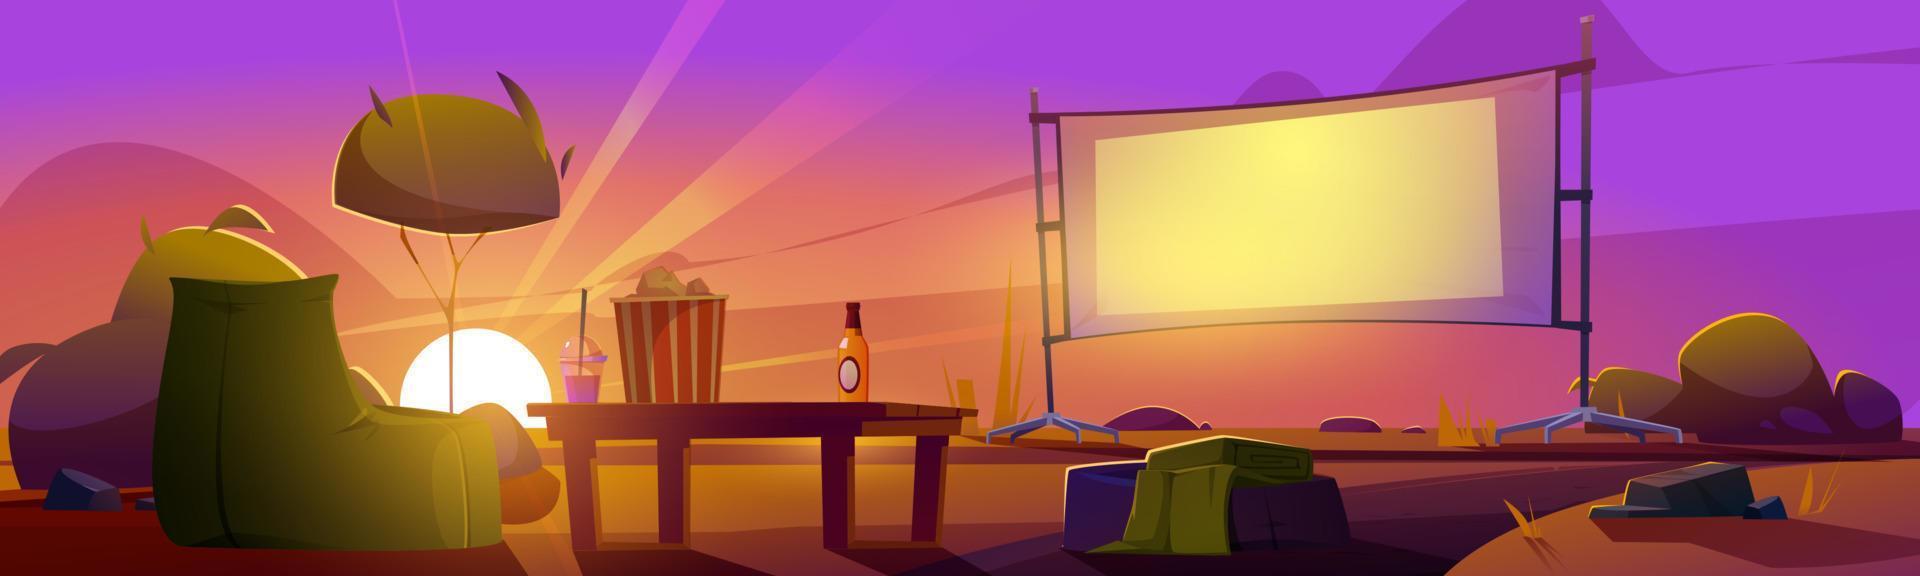 Outdoor cinema at sunset summer landscape, movie vector